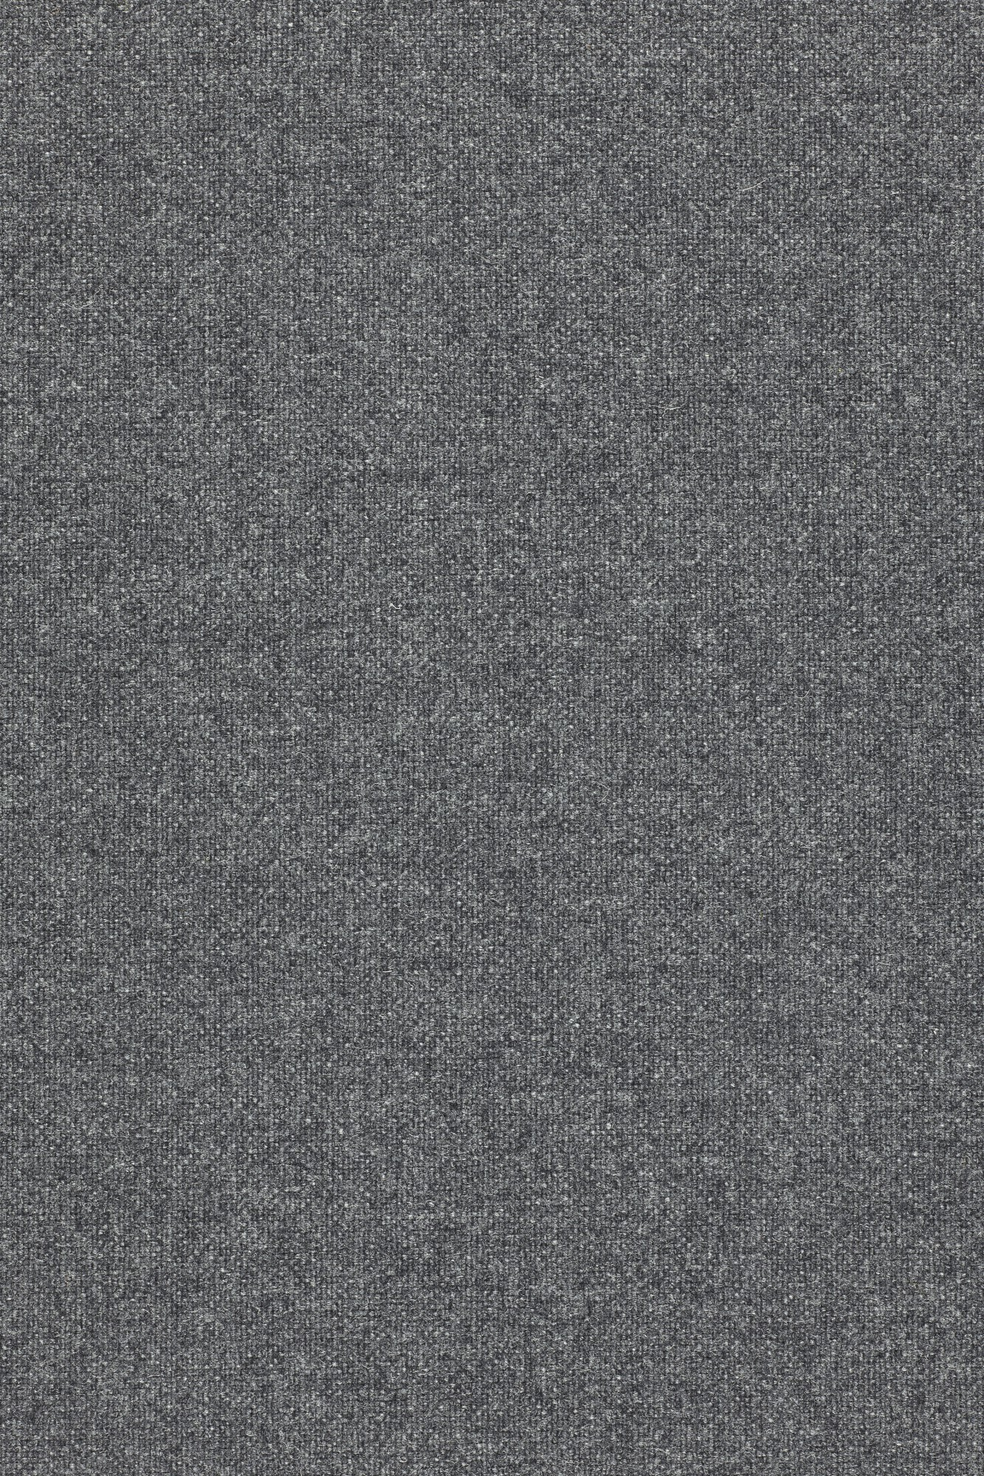 Fabric sample Tonica 2 132 grey